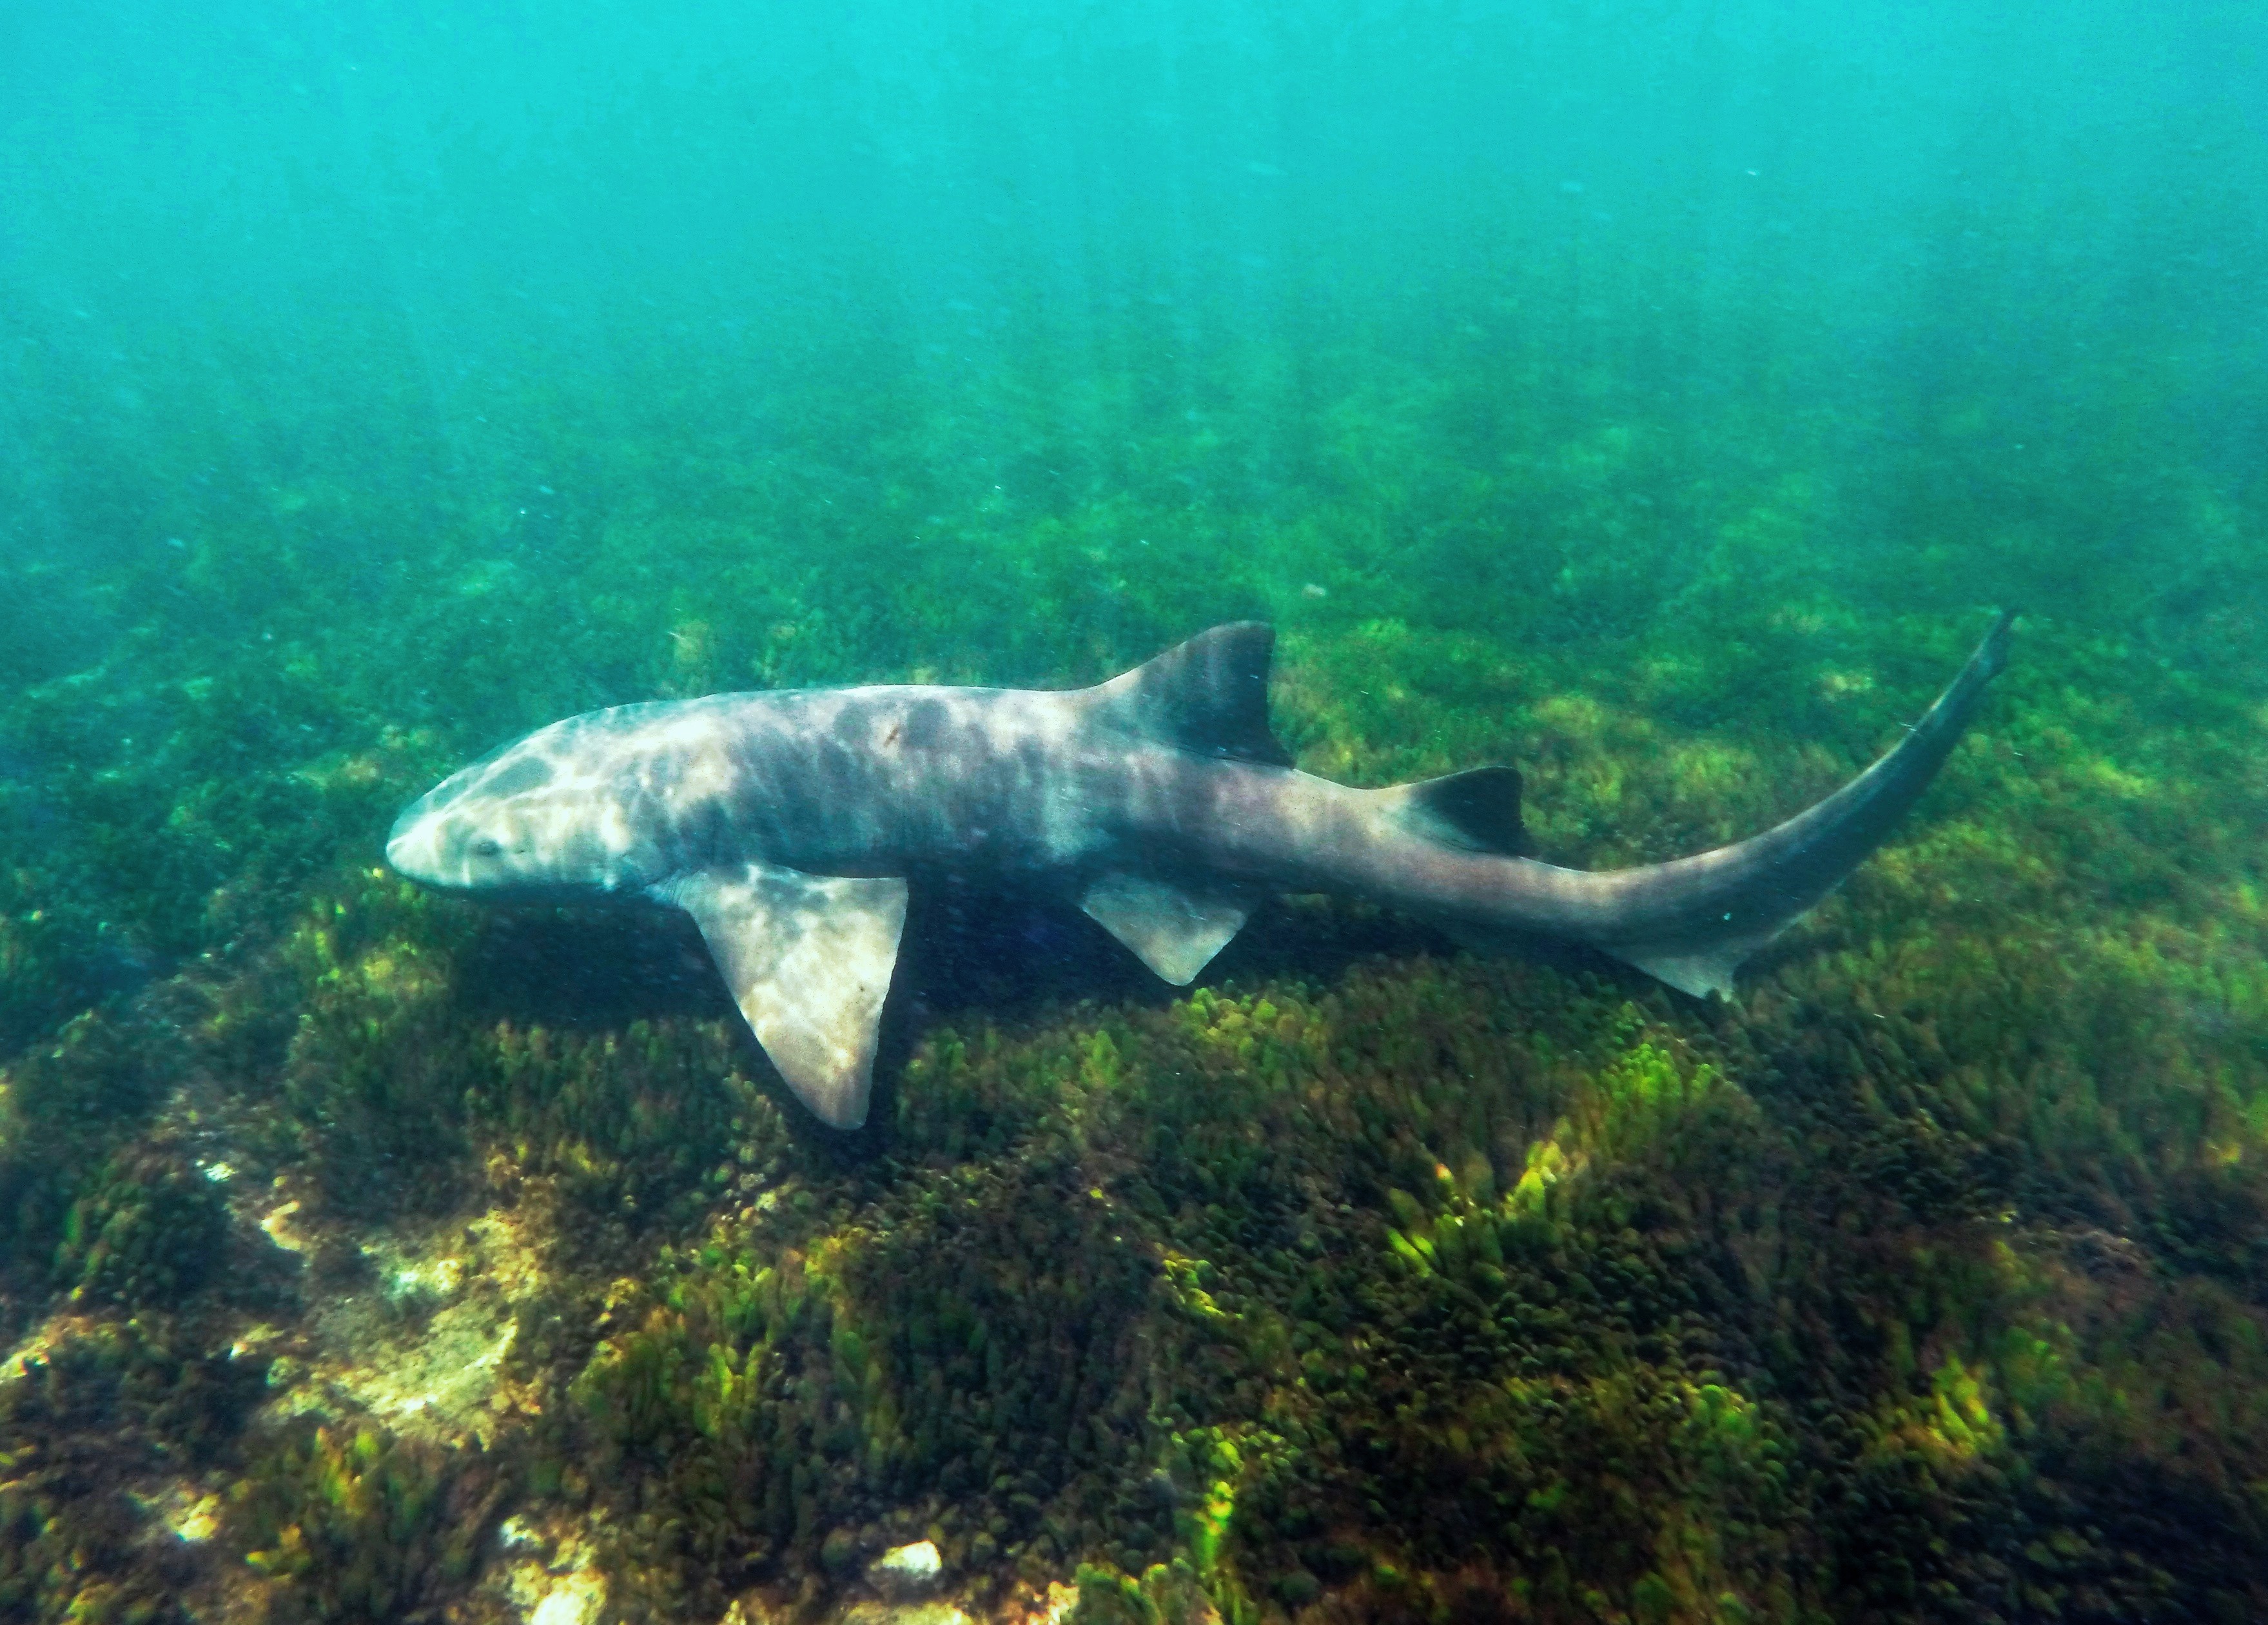 In-water survey confirmed presence of nurse sharks in coastal waters of Maio